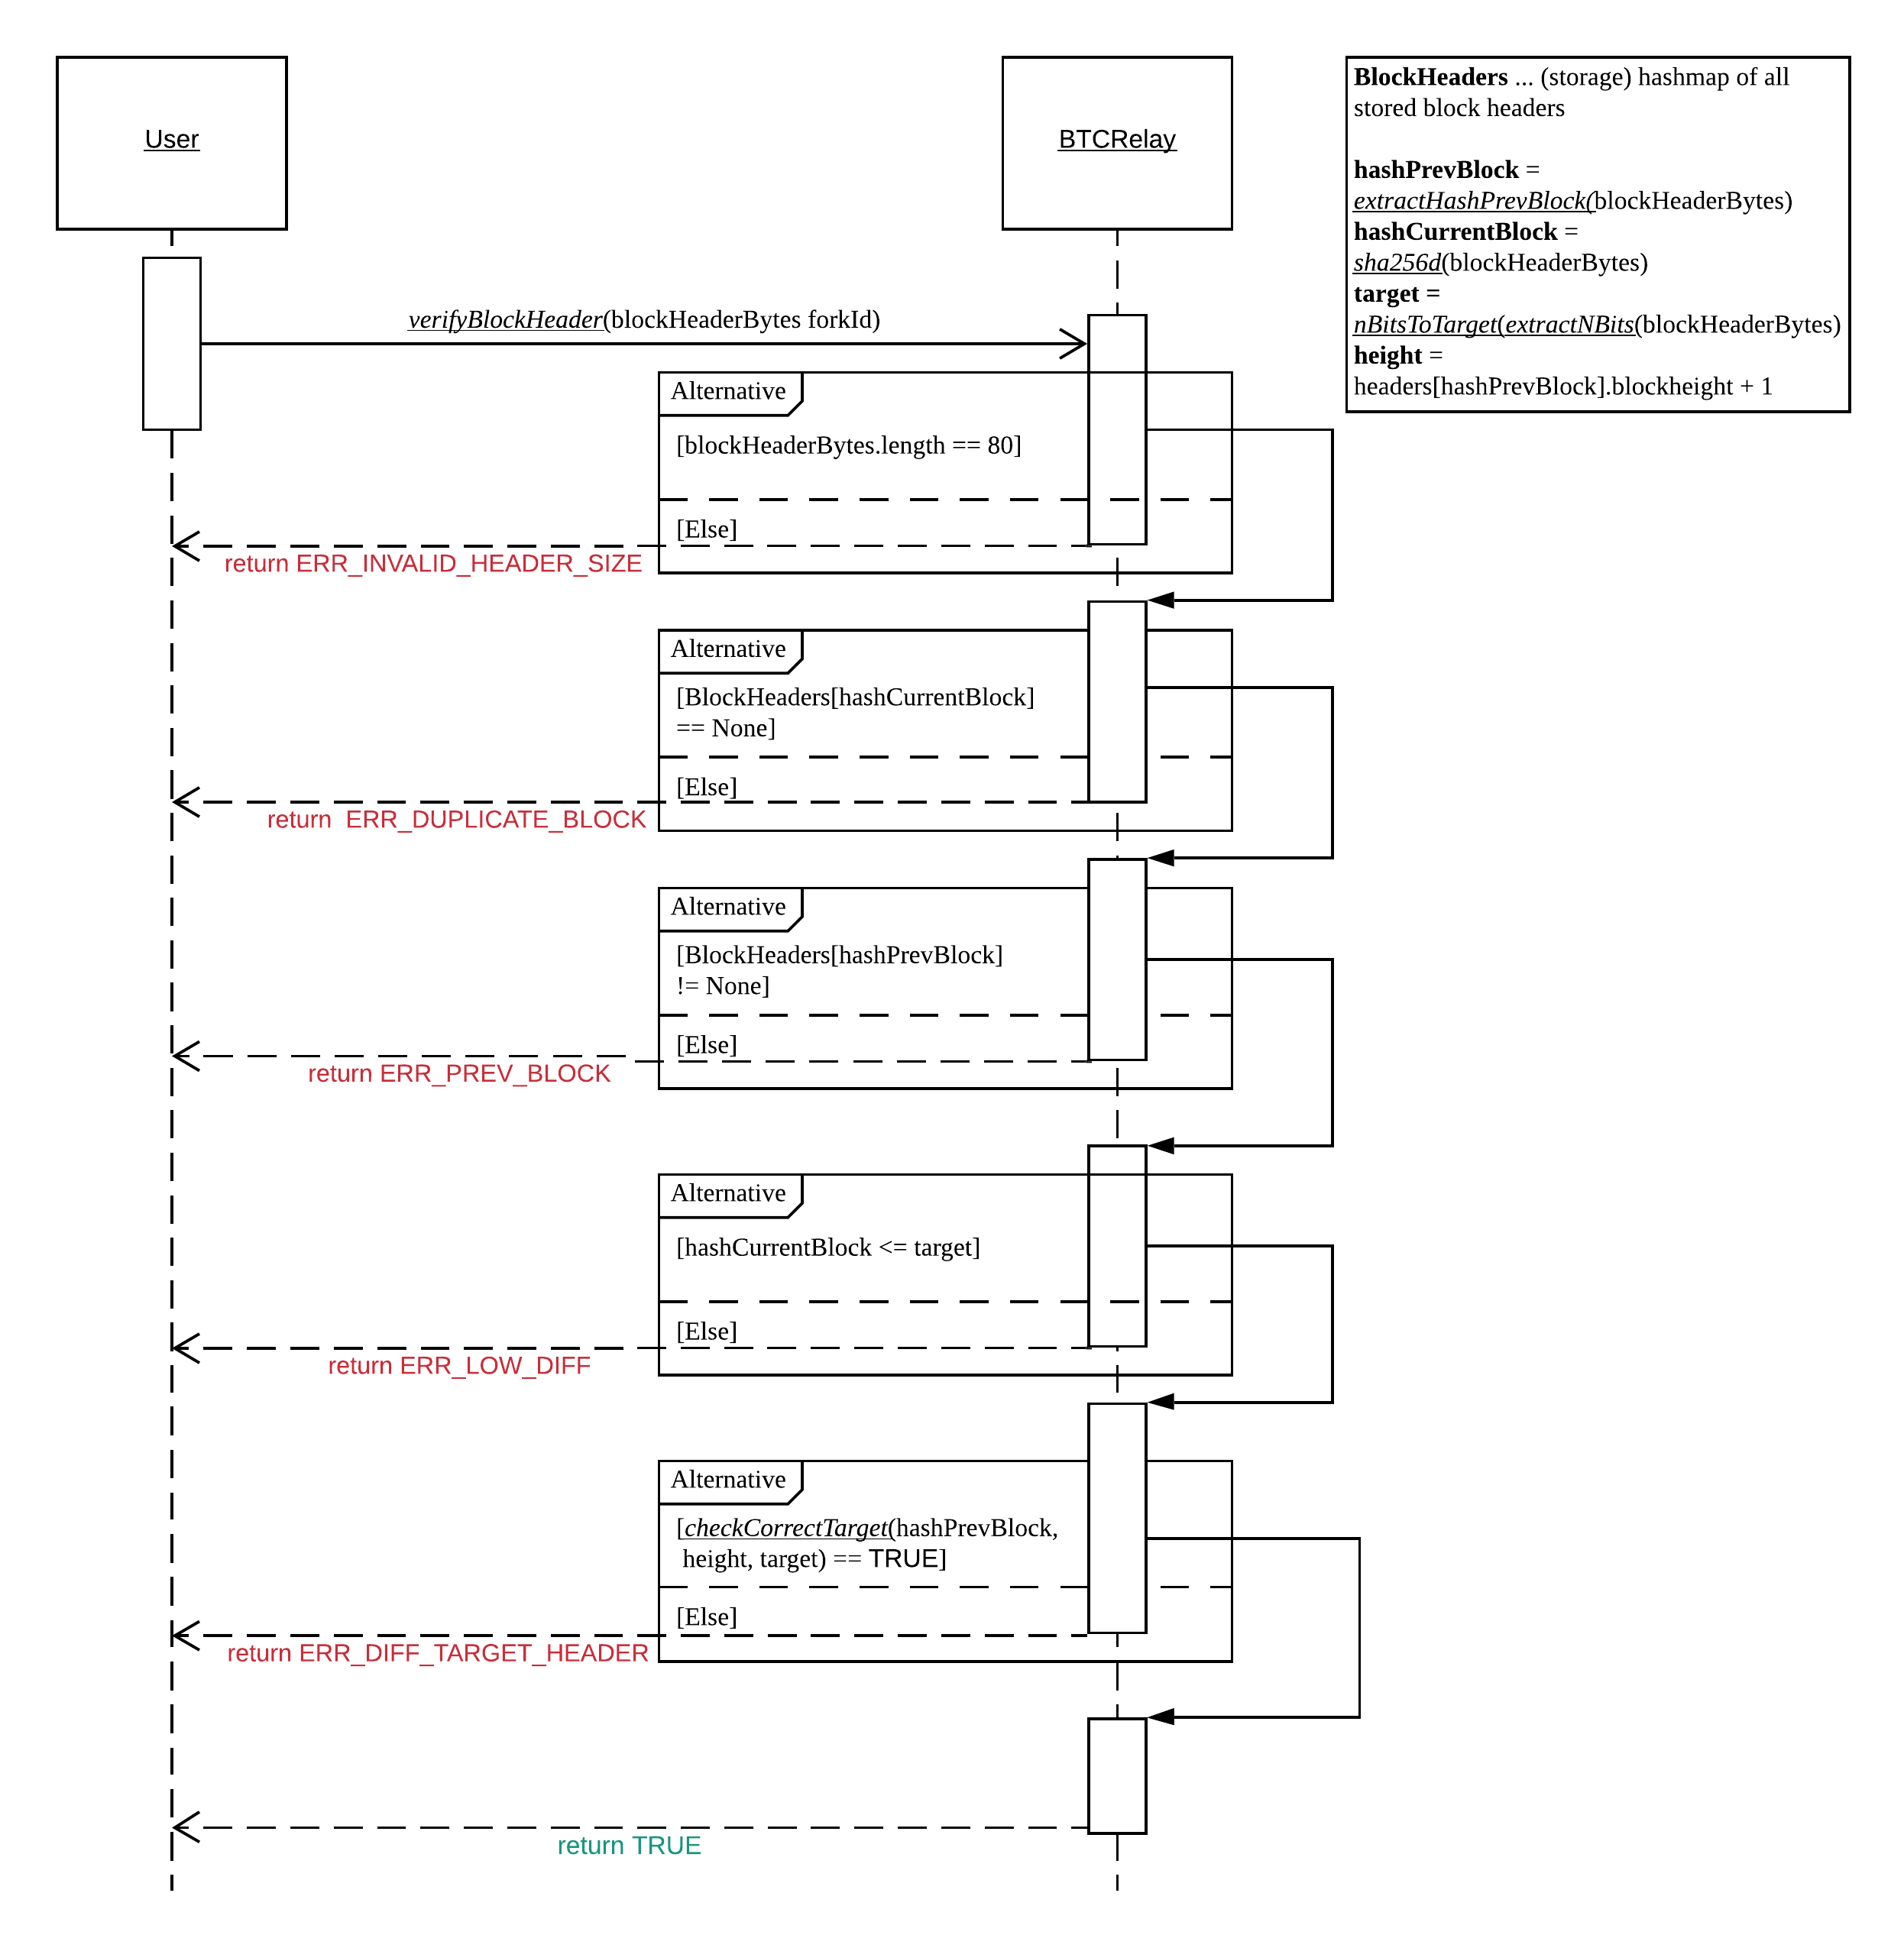 verifyBlockHeader sequence diagram